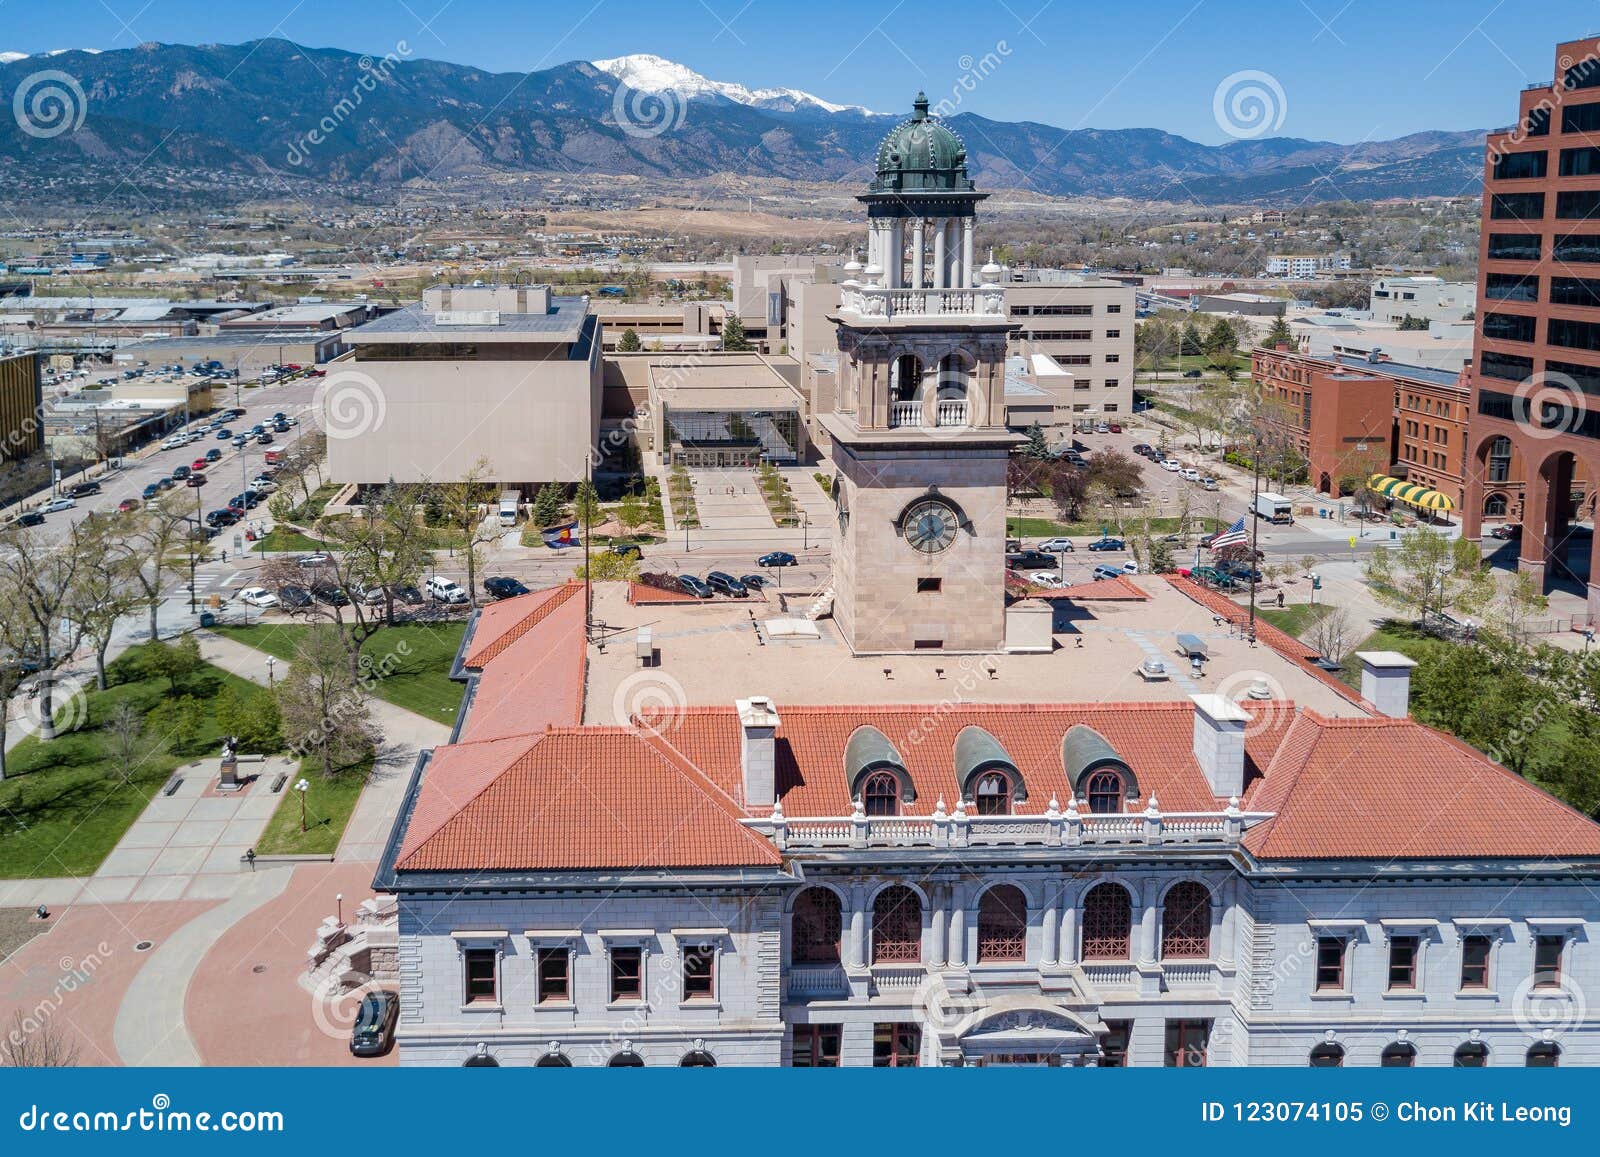 Aerial View Of The Colorado Springs Pioneers Museum Stock Image Image